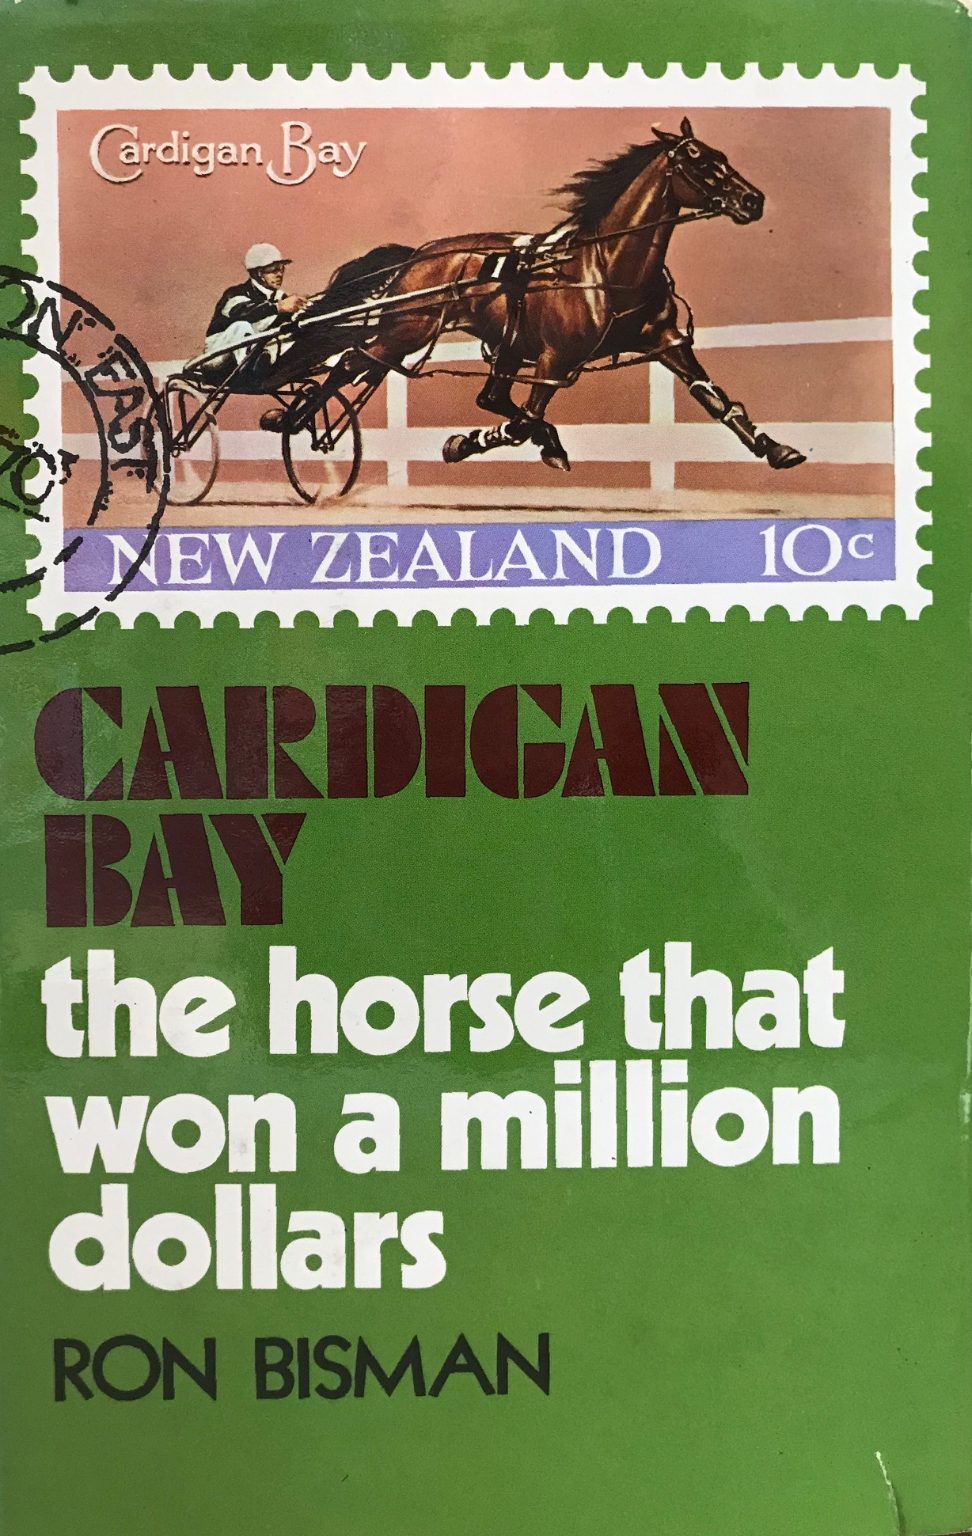 CARDIGAN BAY: The Horse that won a Million Dollars